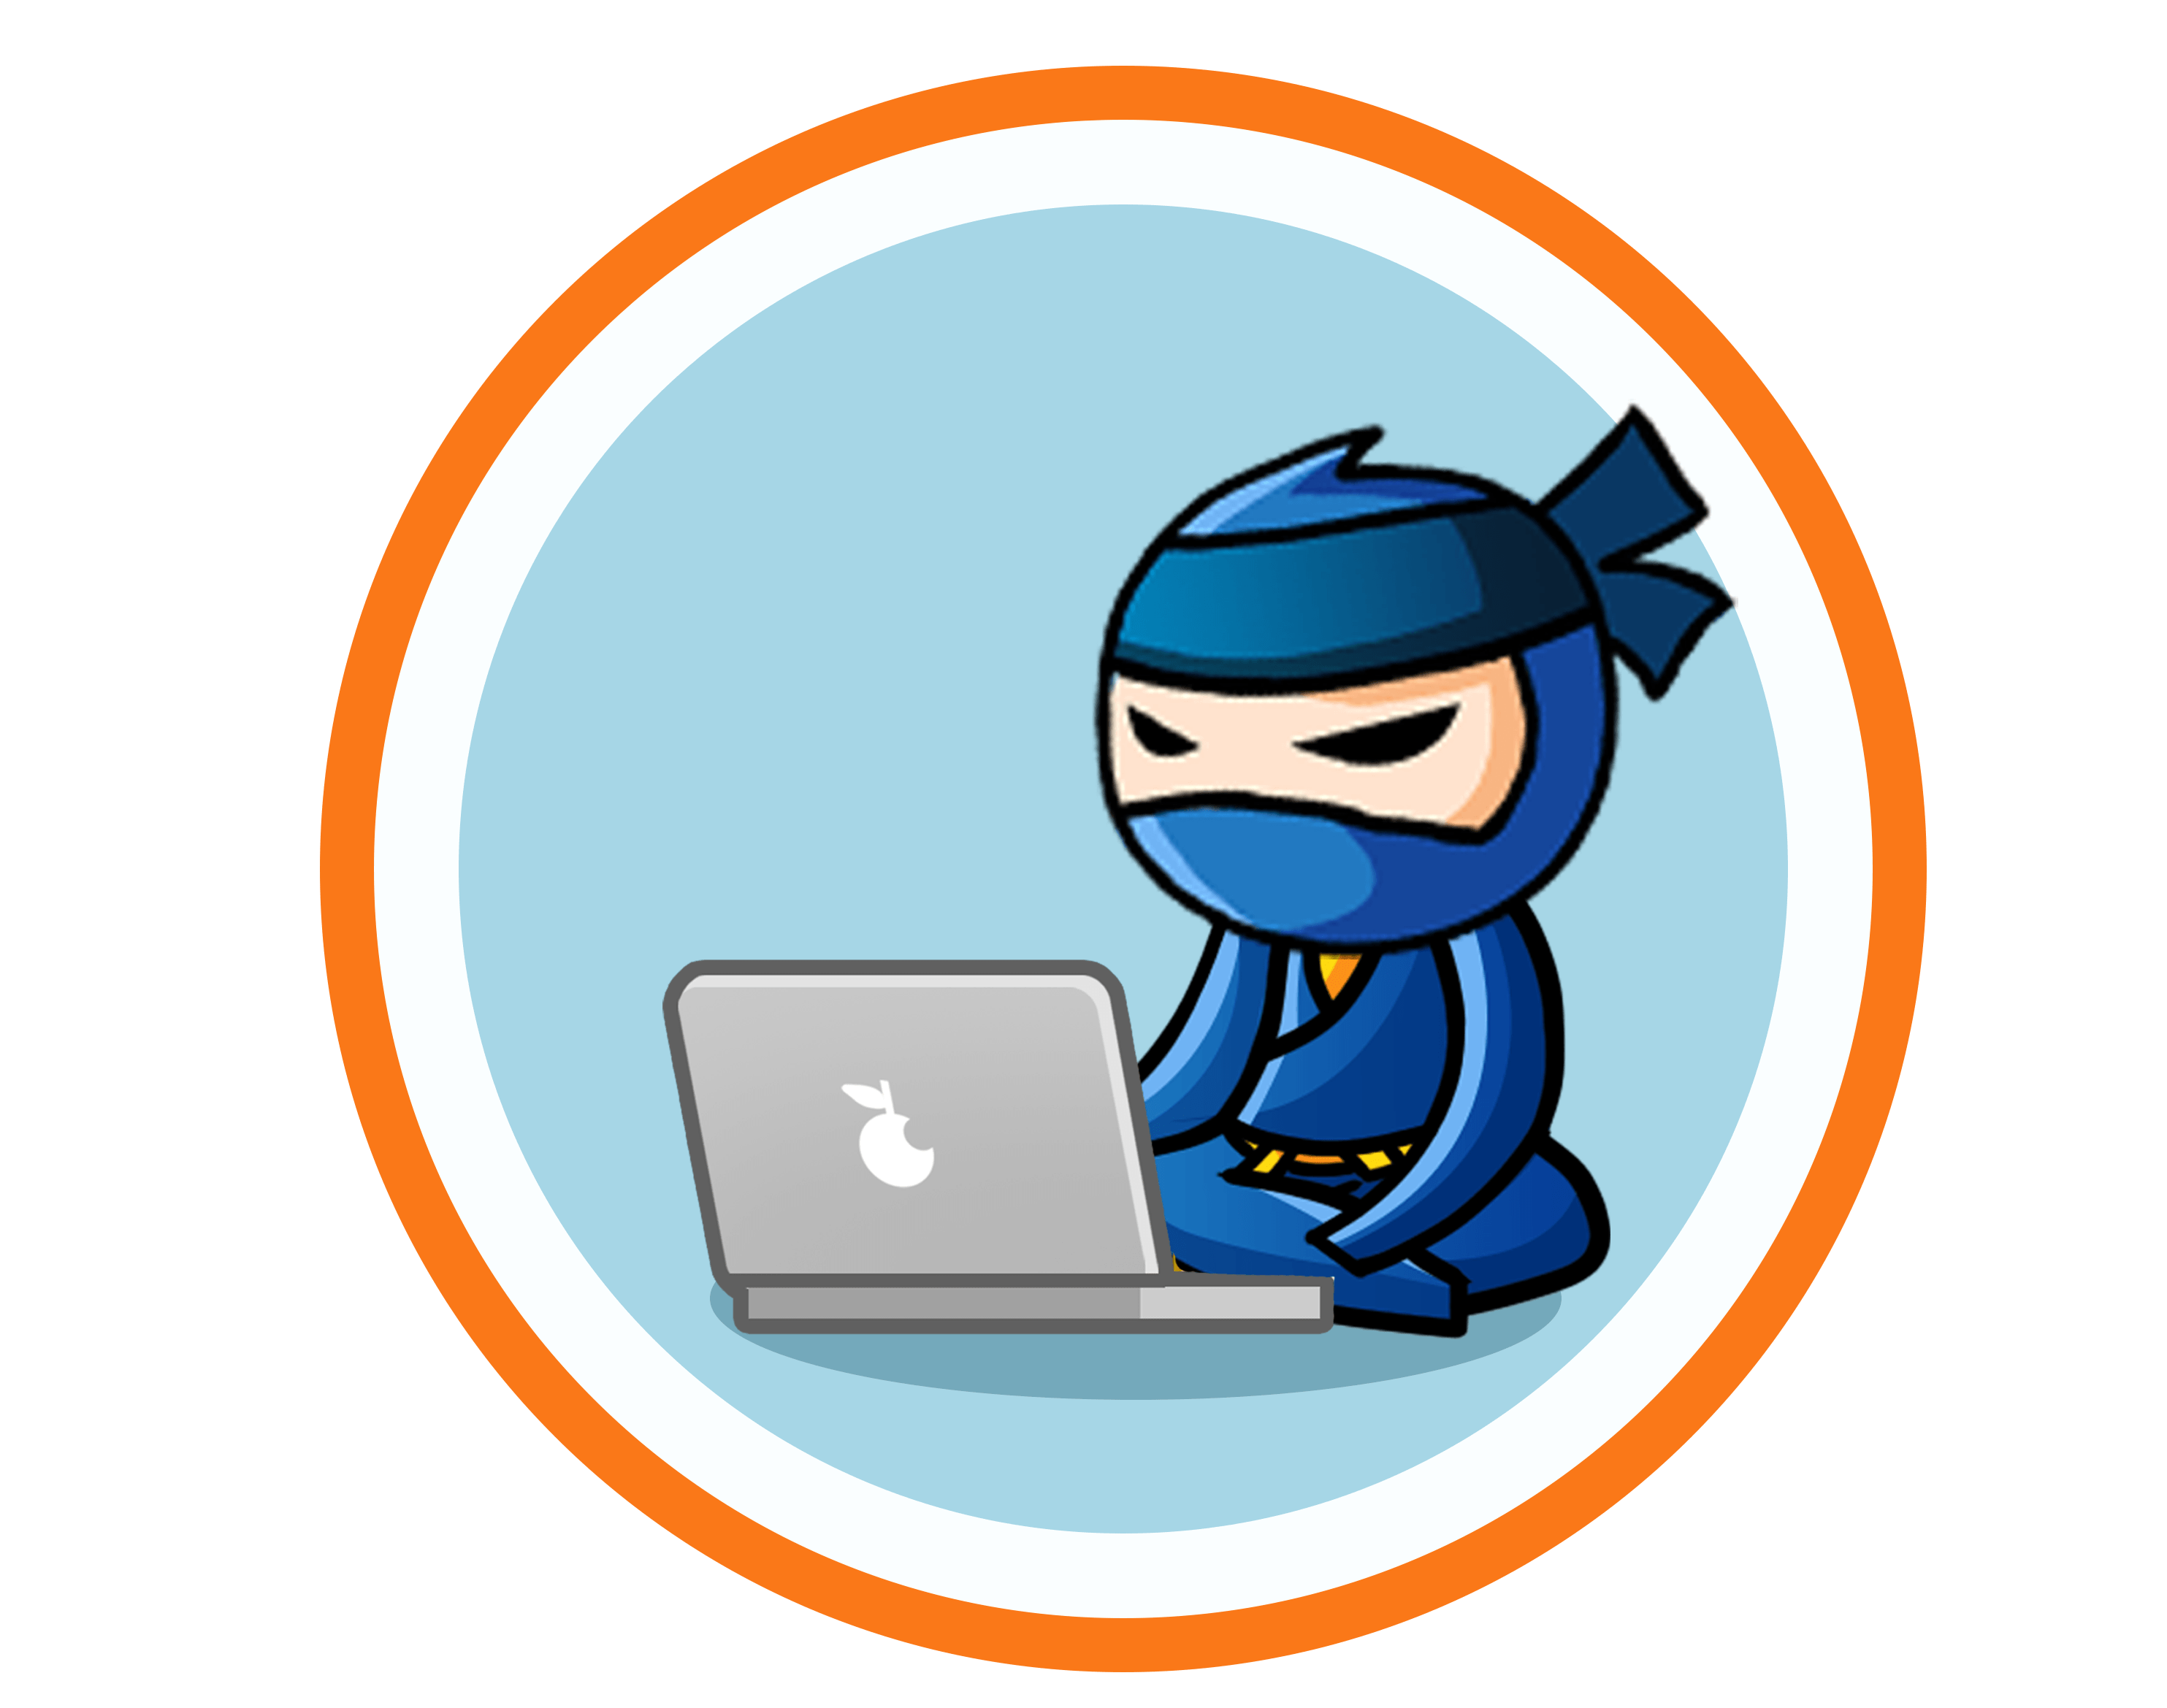 Ninja using laptop